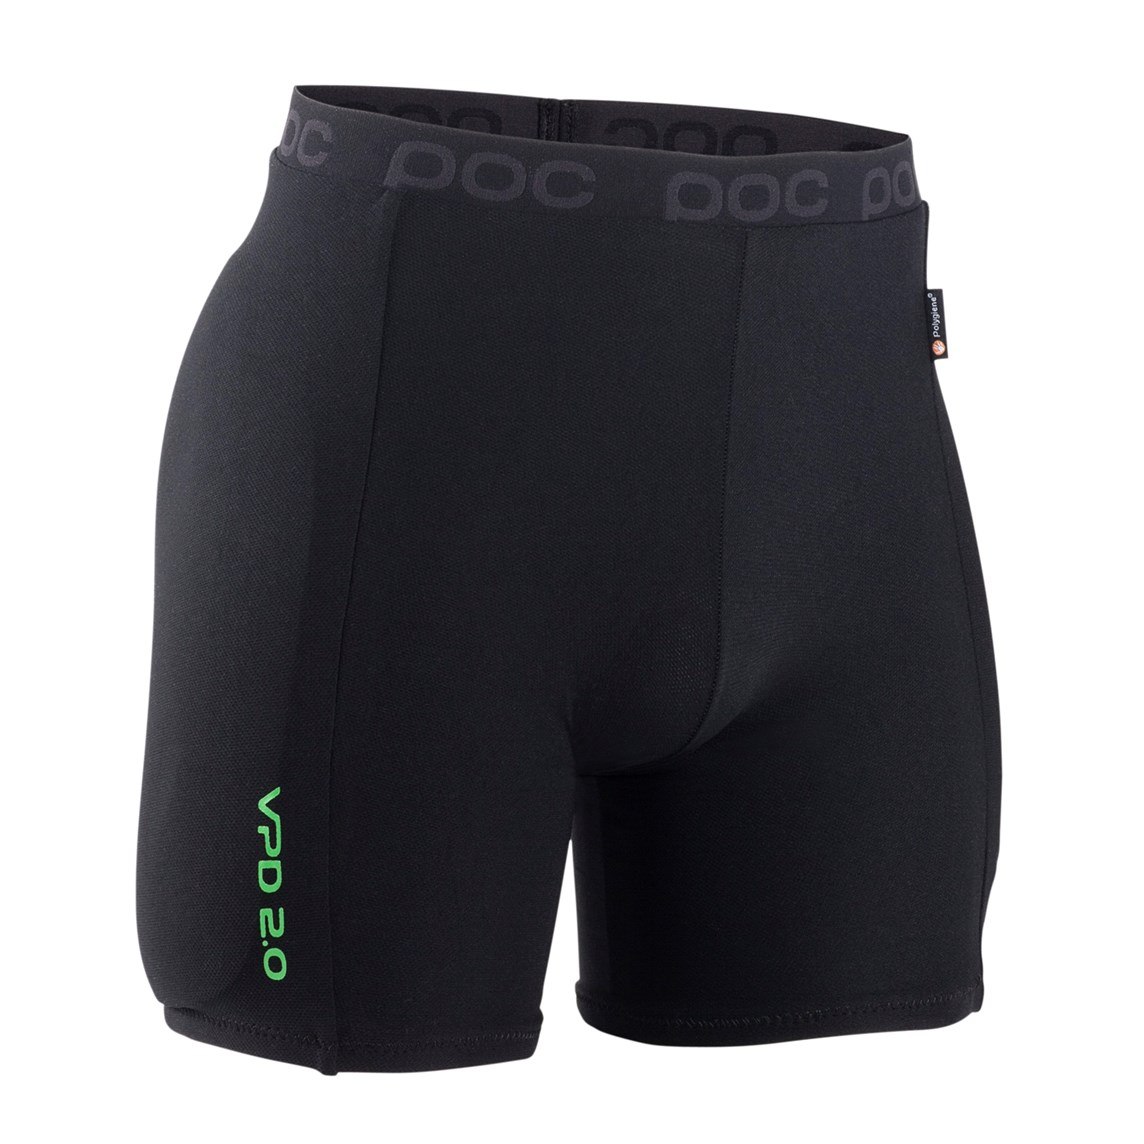 Productfoto van POC Hip VPD 2.0 Shorts Protector Shorts - 9002 black